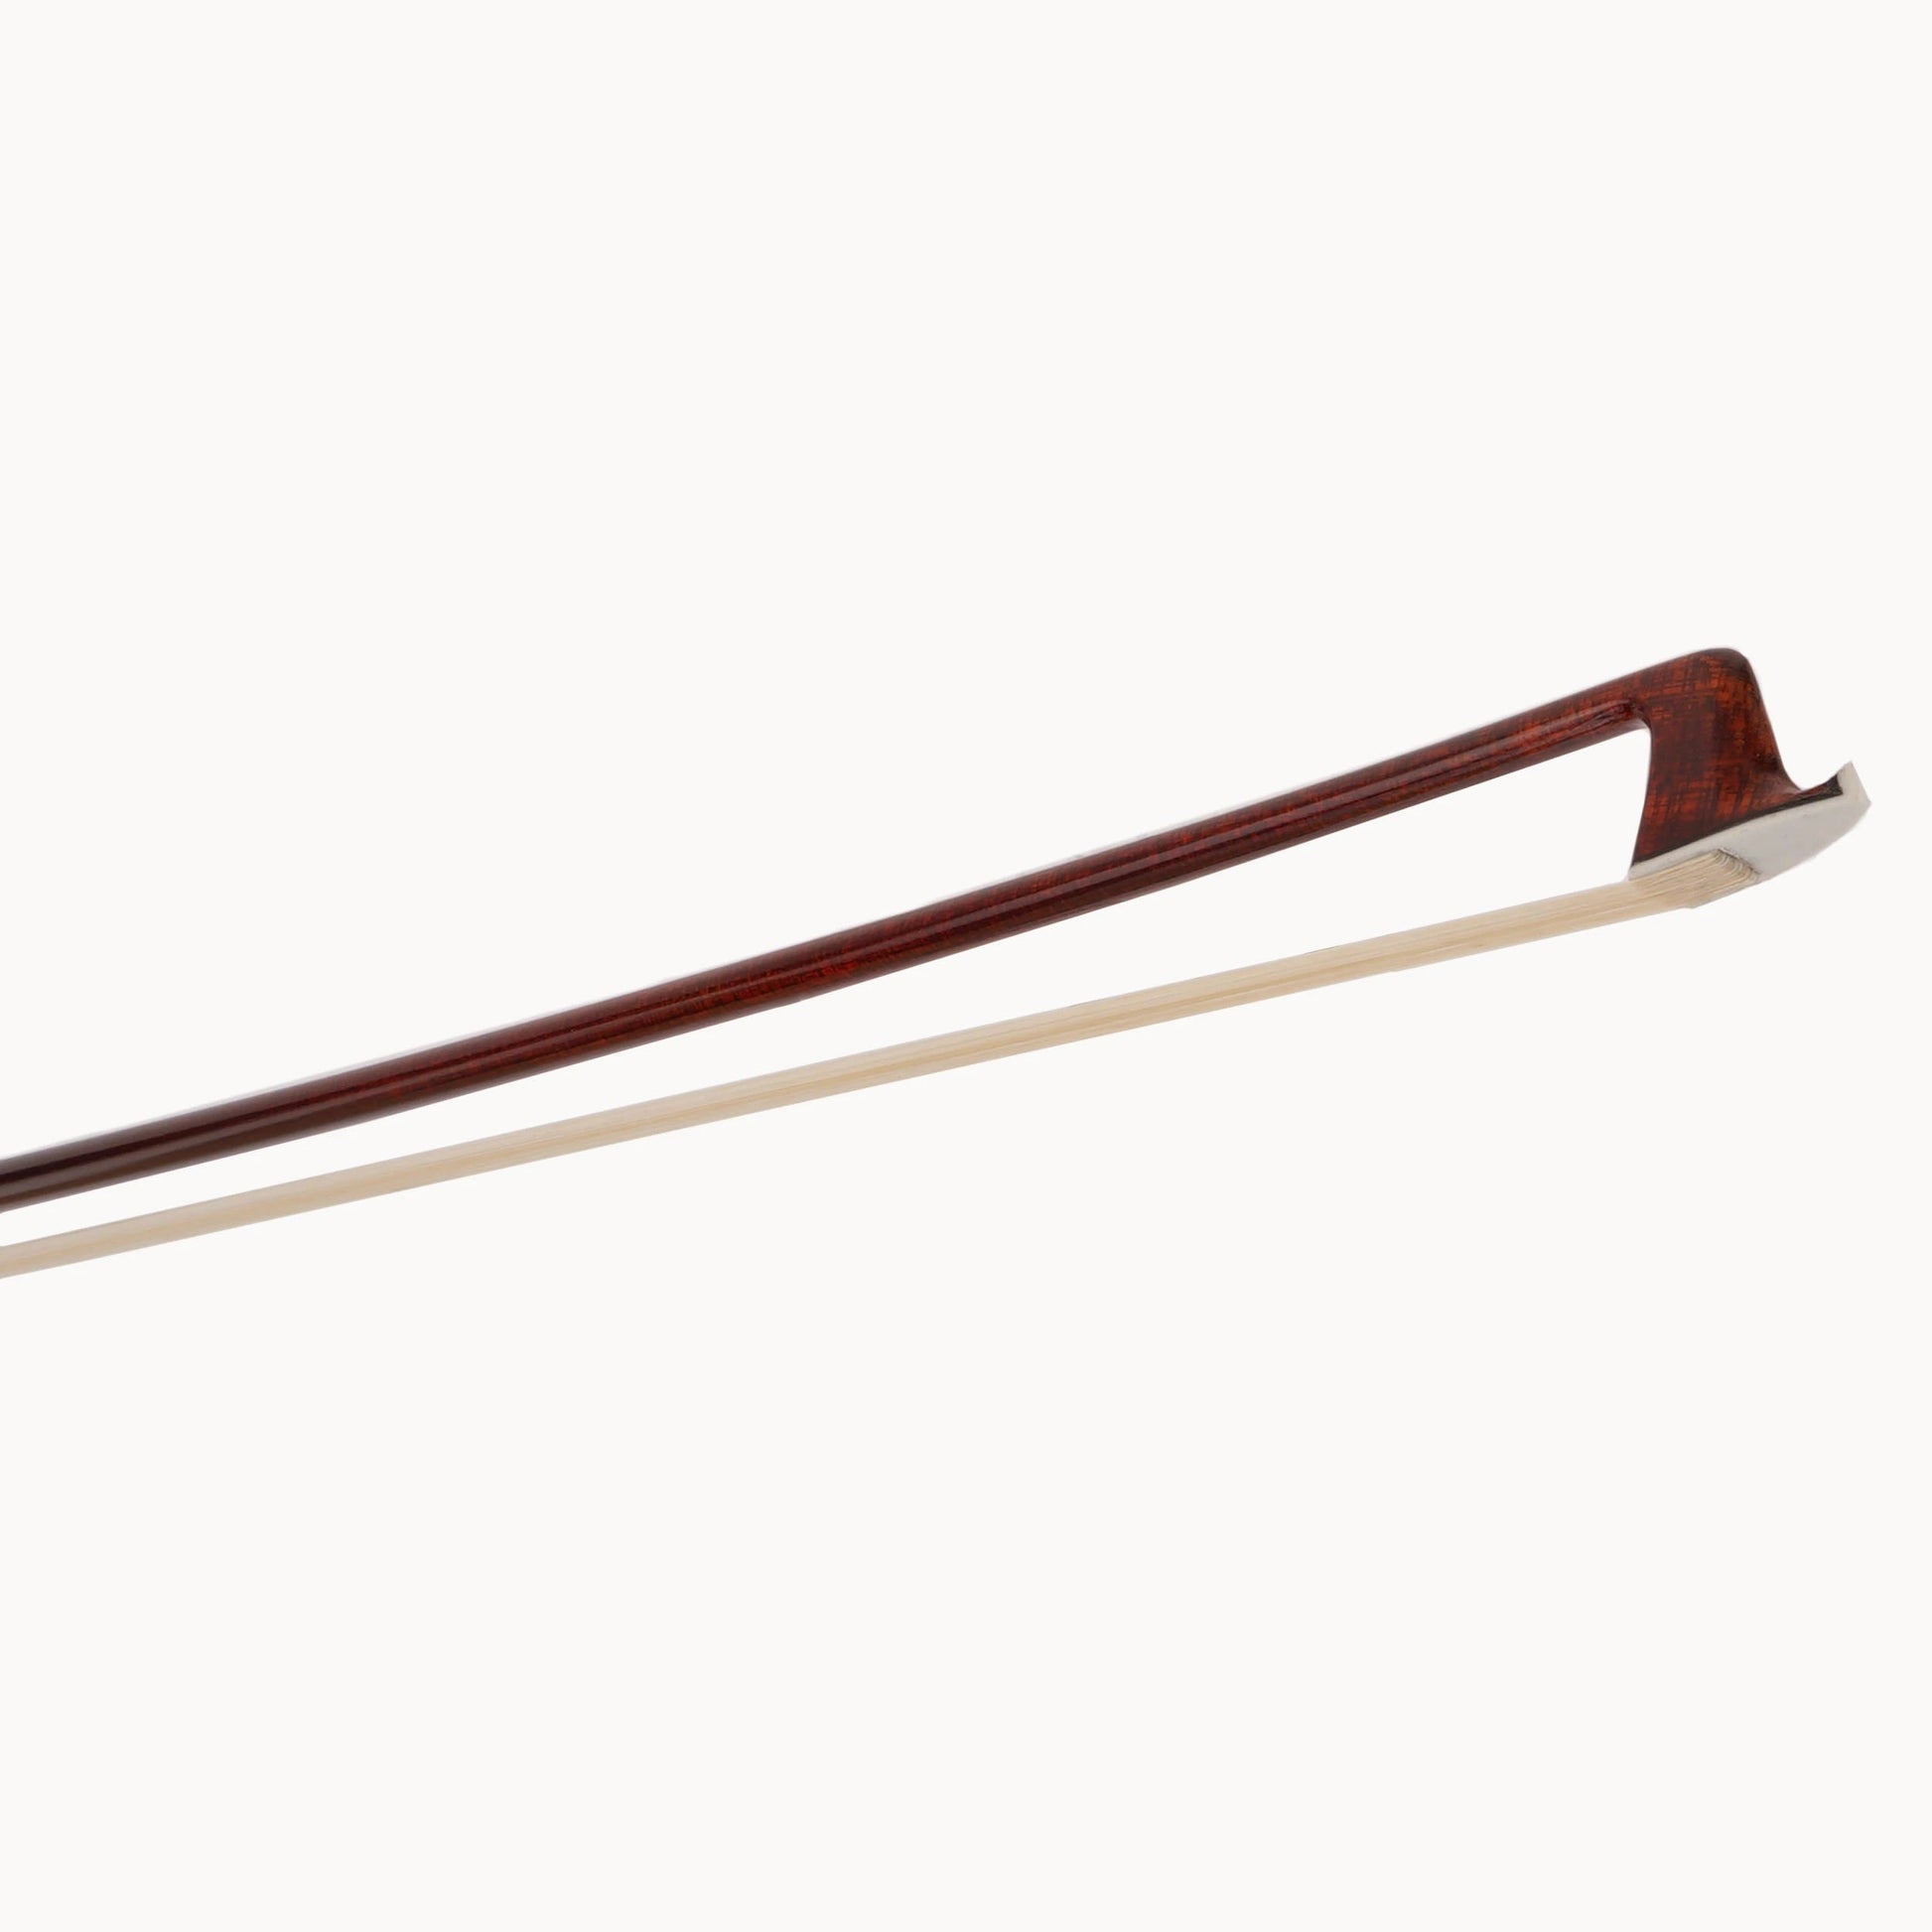 Primo 5126 Hybrid Carbon Fibre Violin Bow Strings, Bows & More